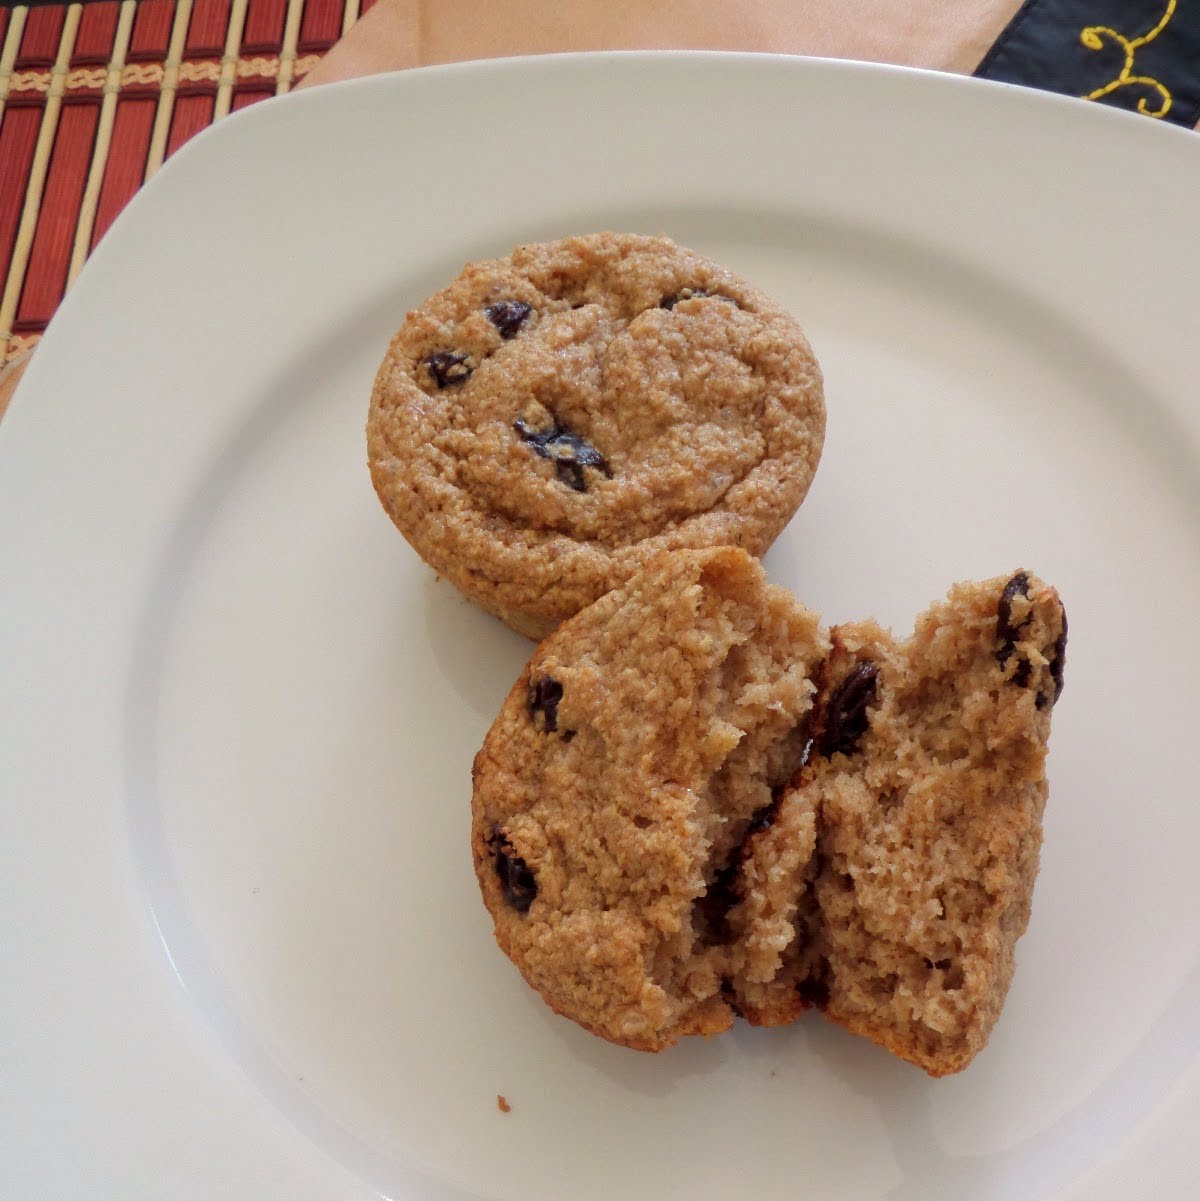 Cinnamon Raisin Bran Muffins: heart healthy bran muffins that are moist and flavorful with cinnamon and raisins.